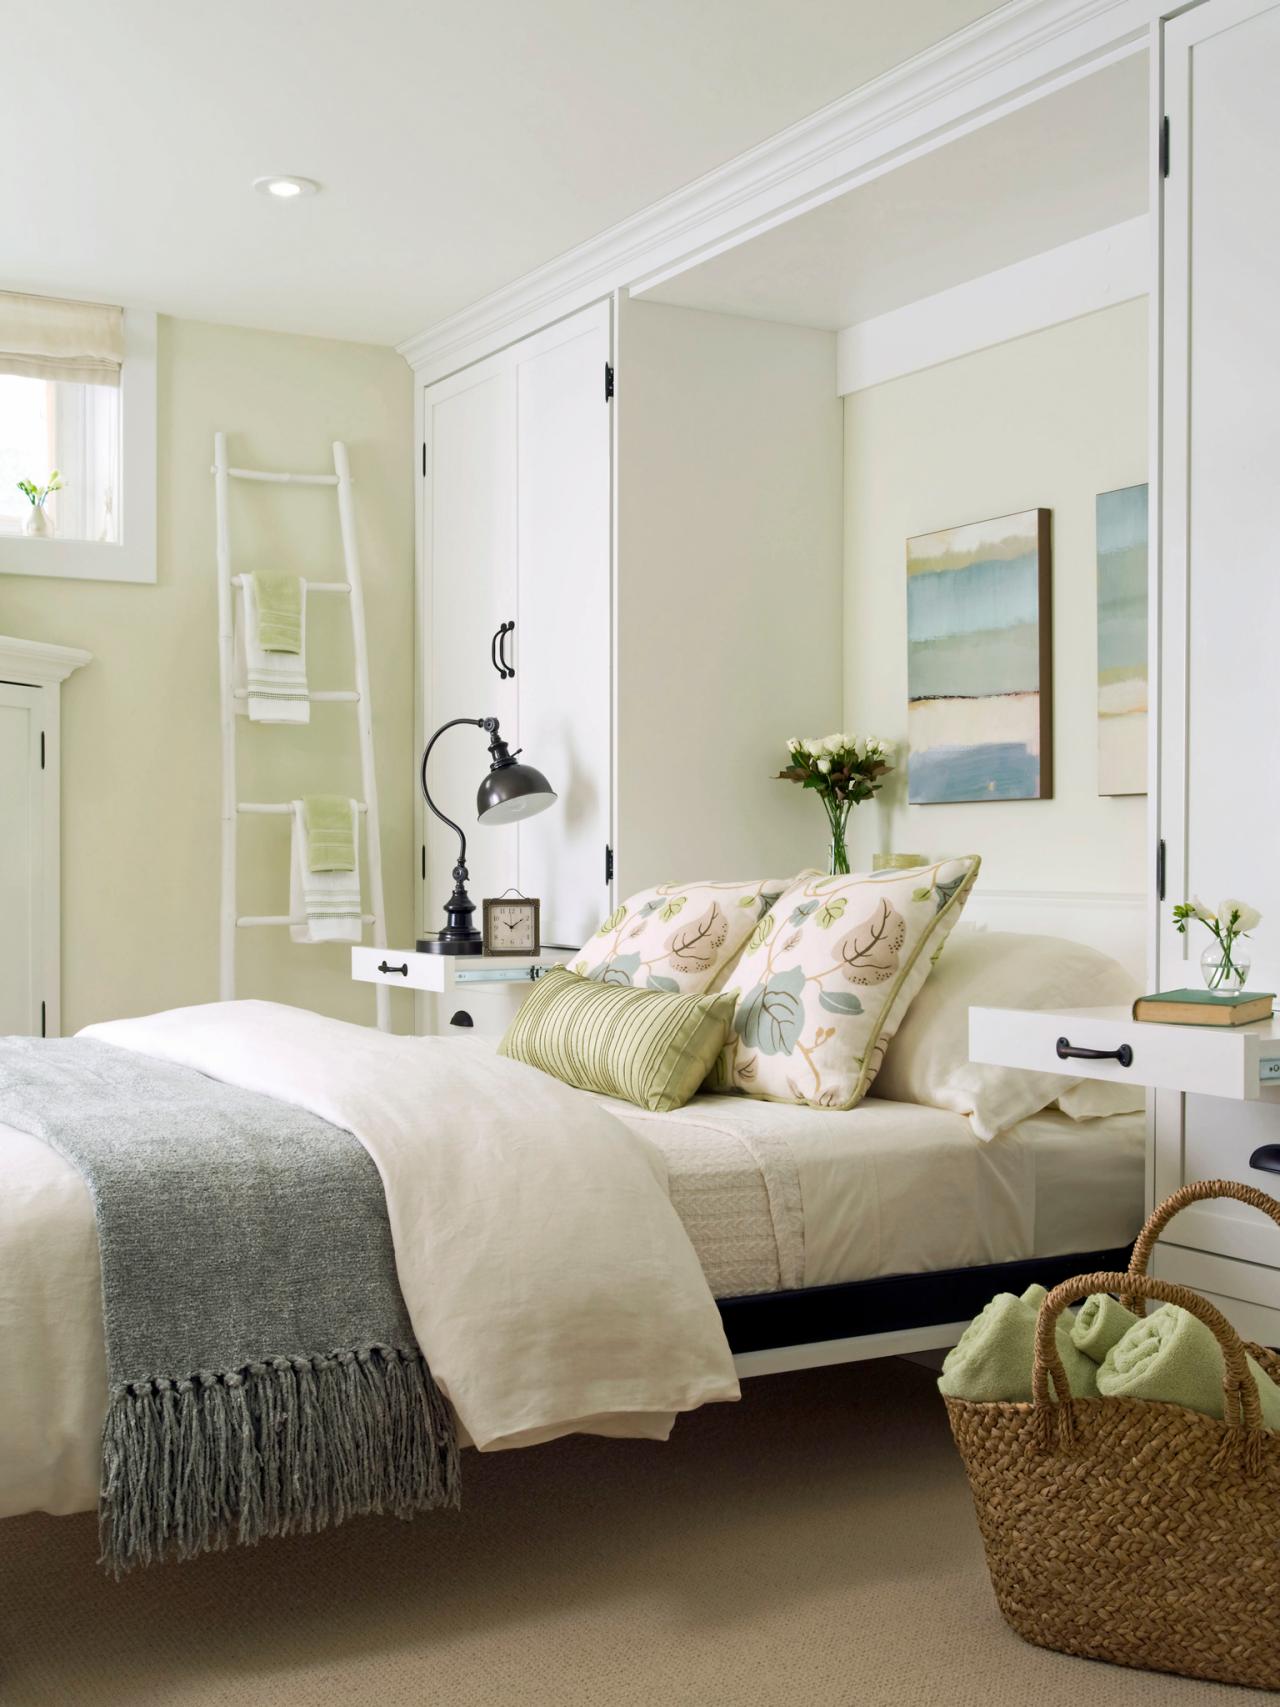 14 Ideas For Small Bedroom Decor Hgtv S Decorating Design Blog Hgtv,Walk In Closet Organizers Ideas